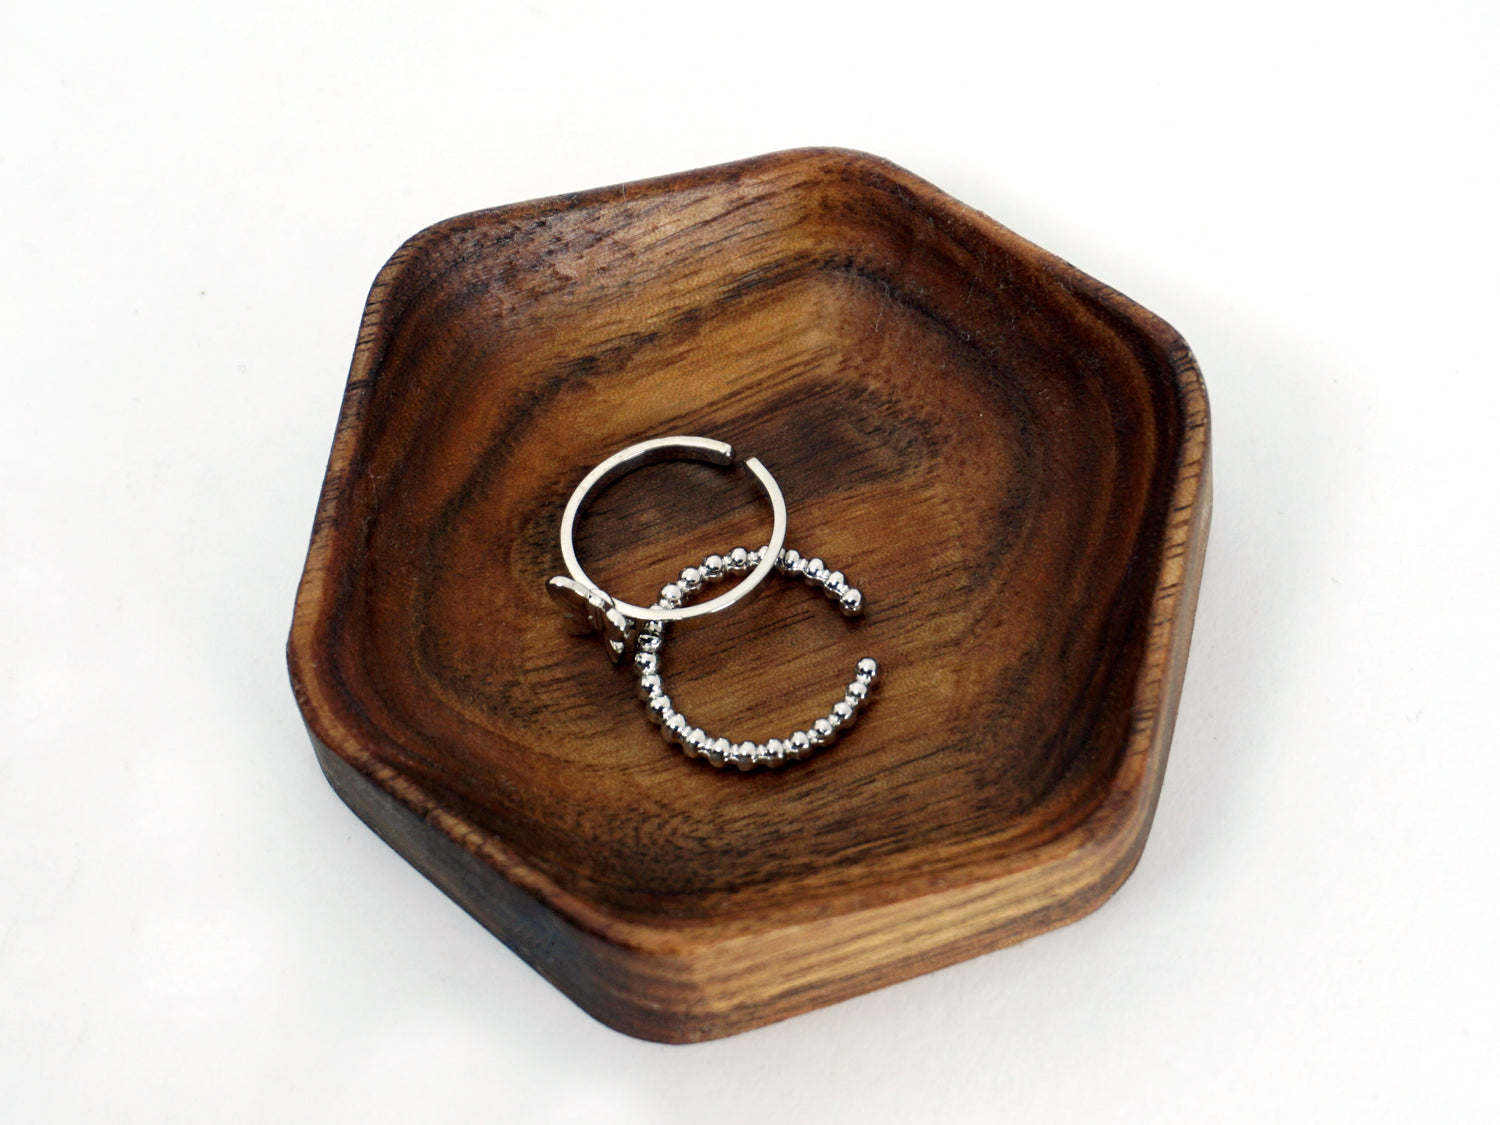 rings in a jewelry desk organizer tray